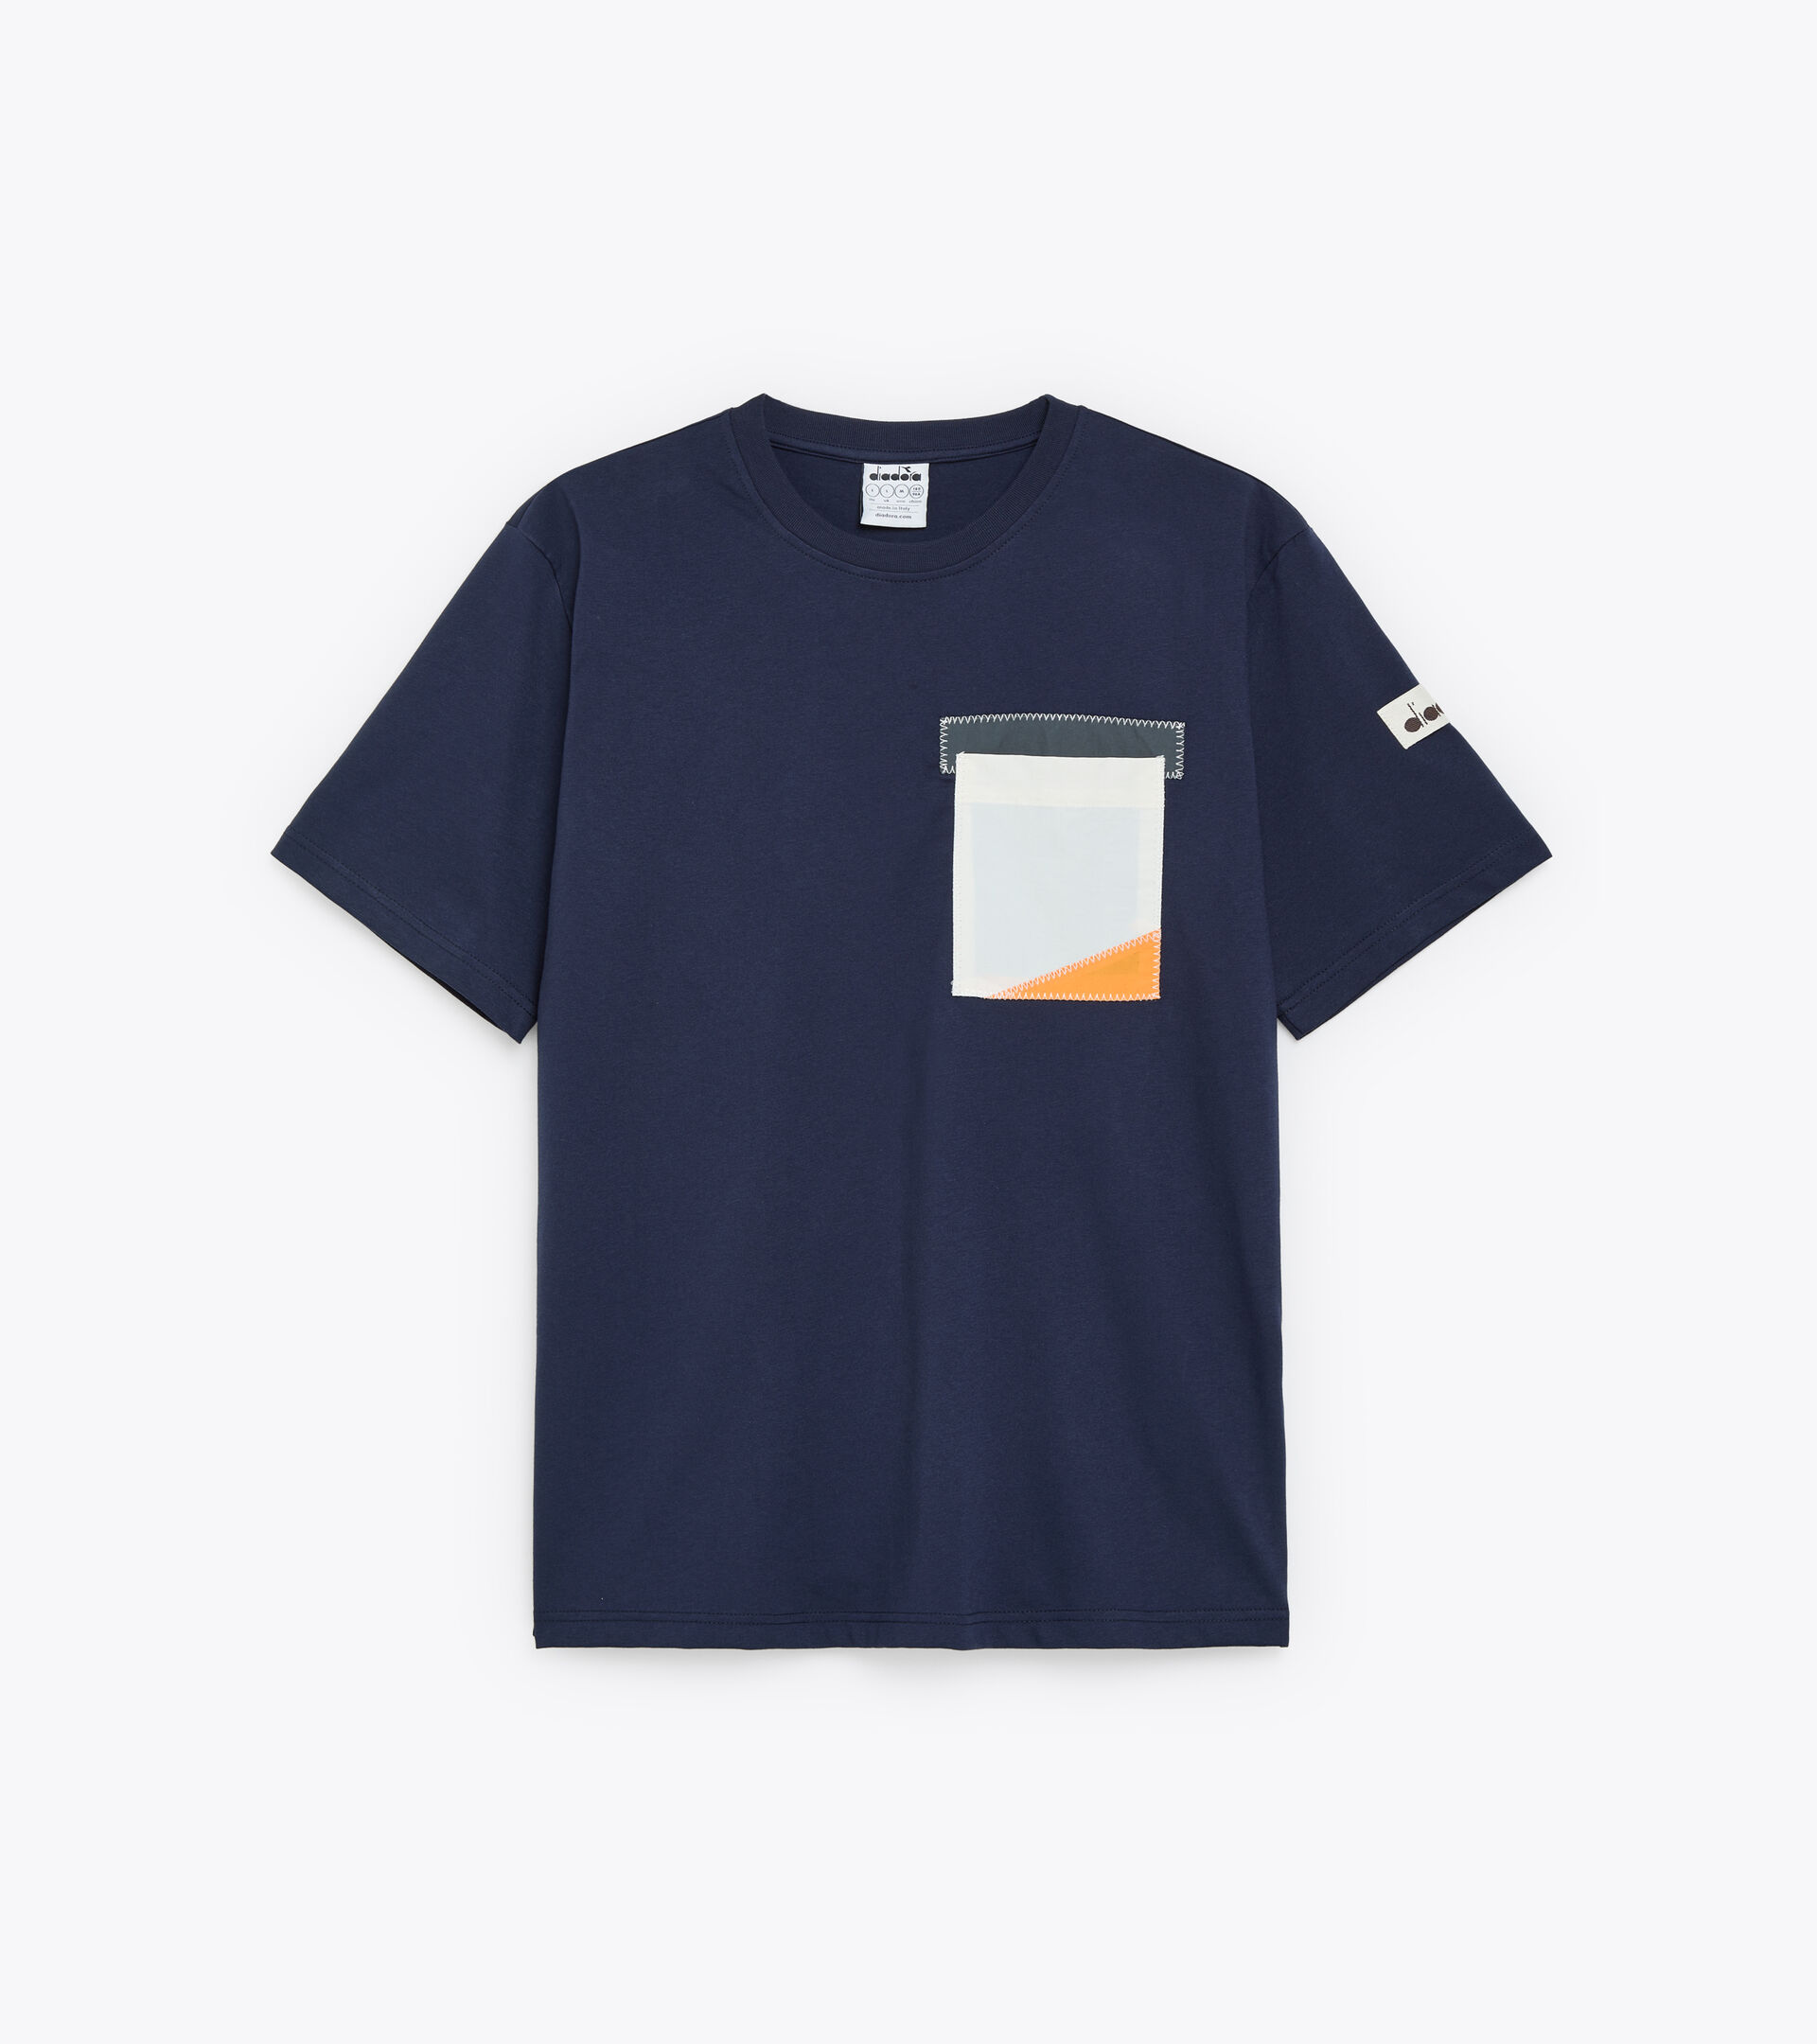 T-shirt - Made in Italy - Uomo T-SHIRT SS 2030 BLU CORSARO - Diadora